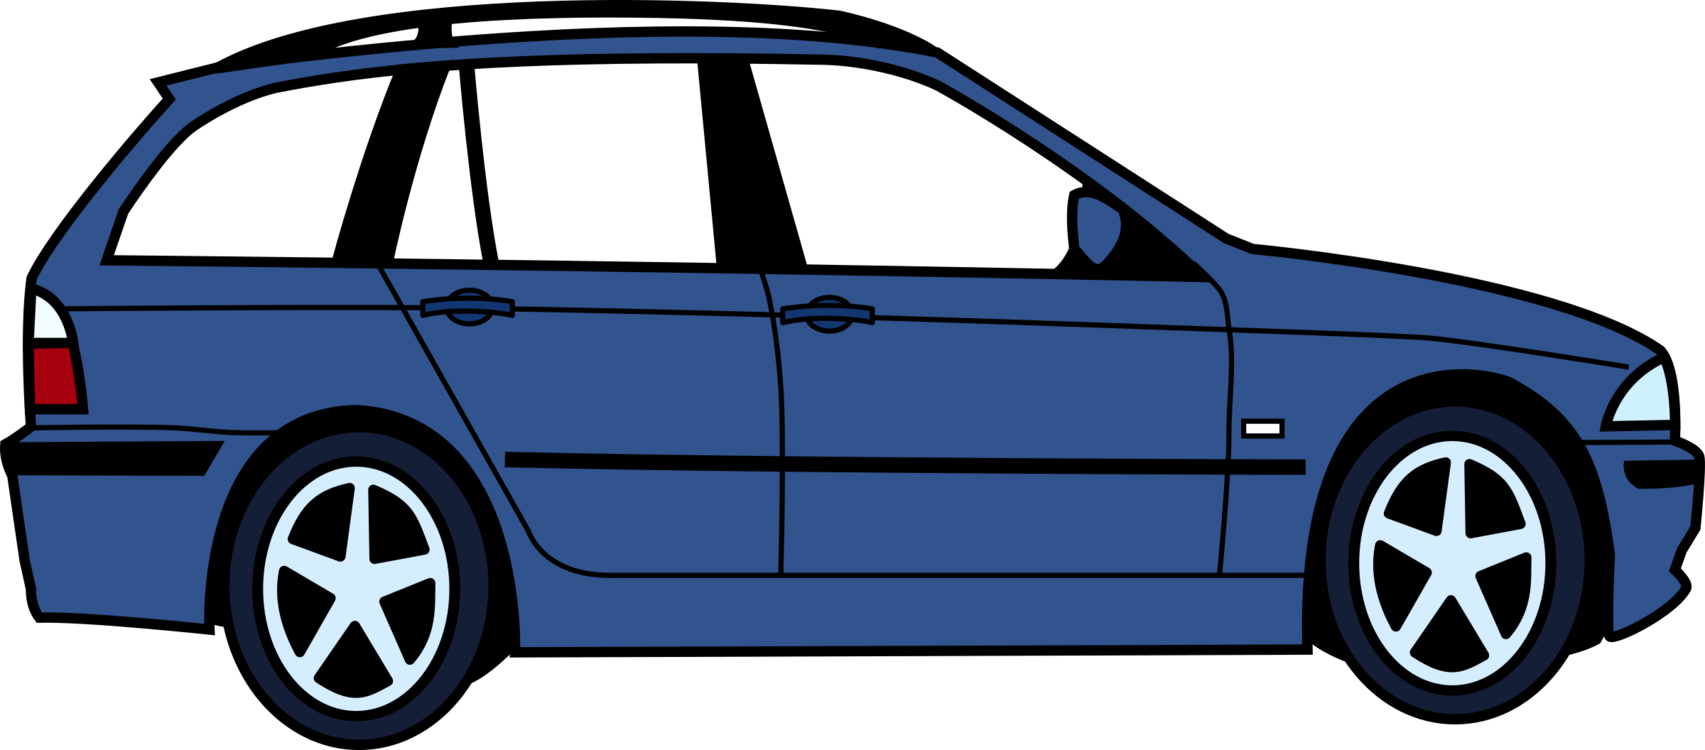 Car BMW 6 Series Clip Art: Transportation Animation CC0.